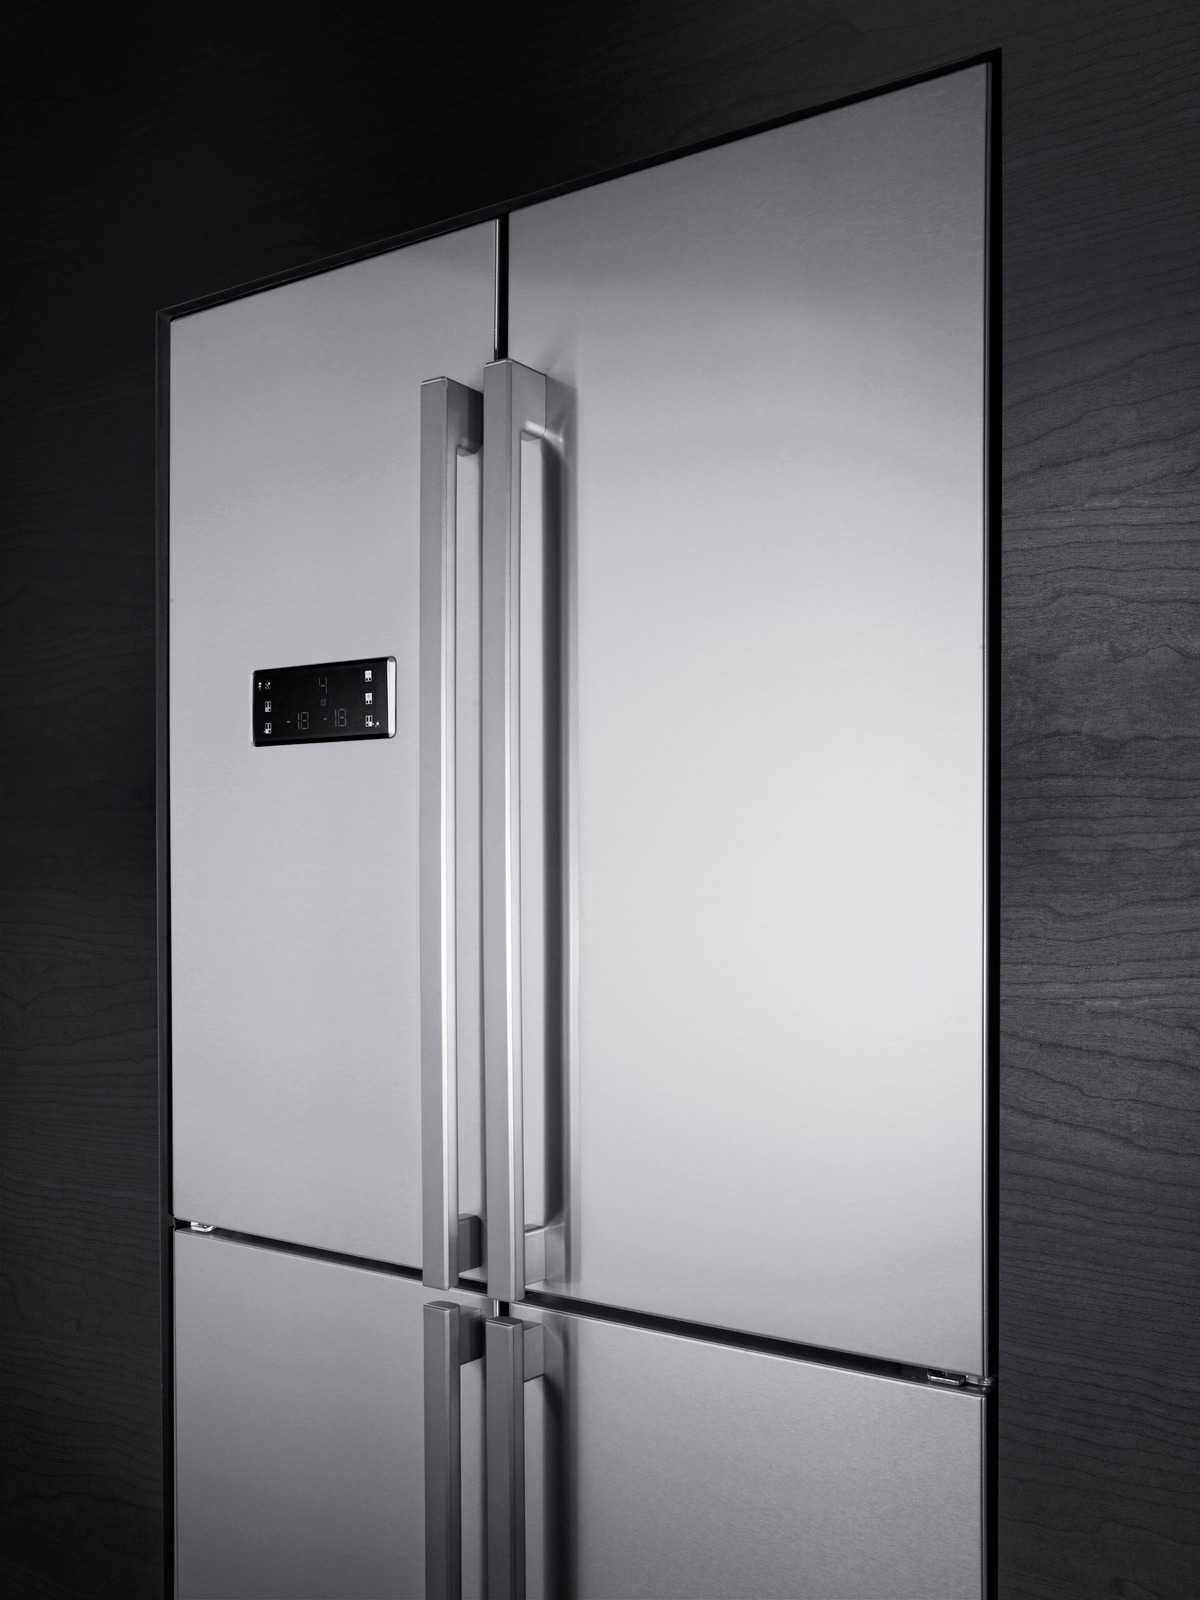 A built-in refrigerator